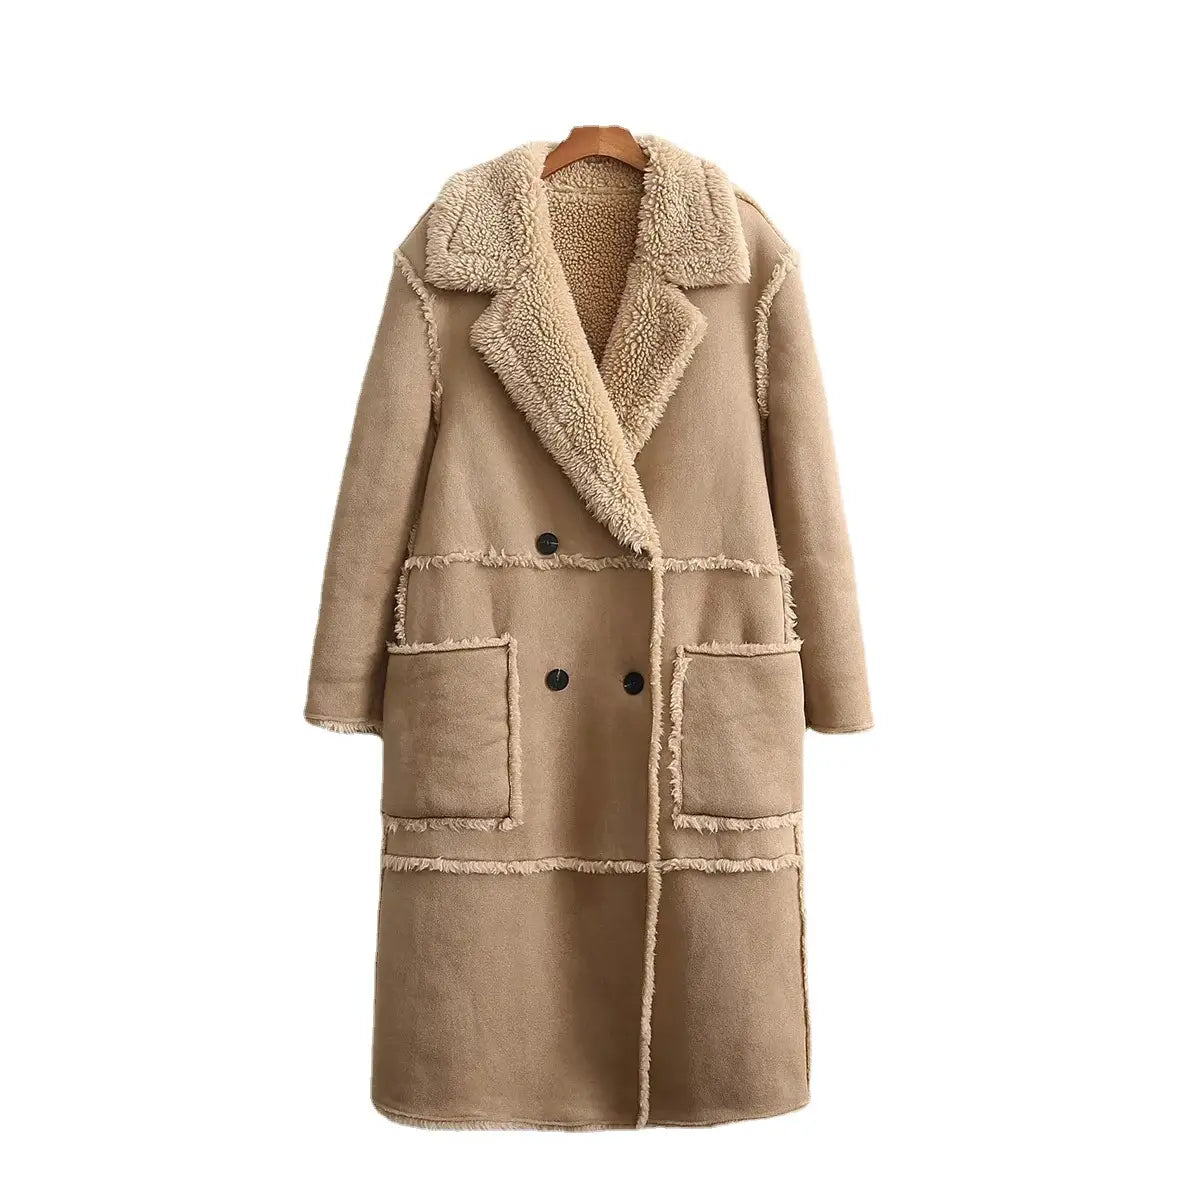 Lovemi - Personality Stitching Fleece Coat Coat Autumn